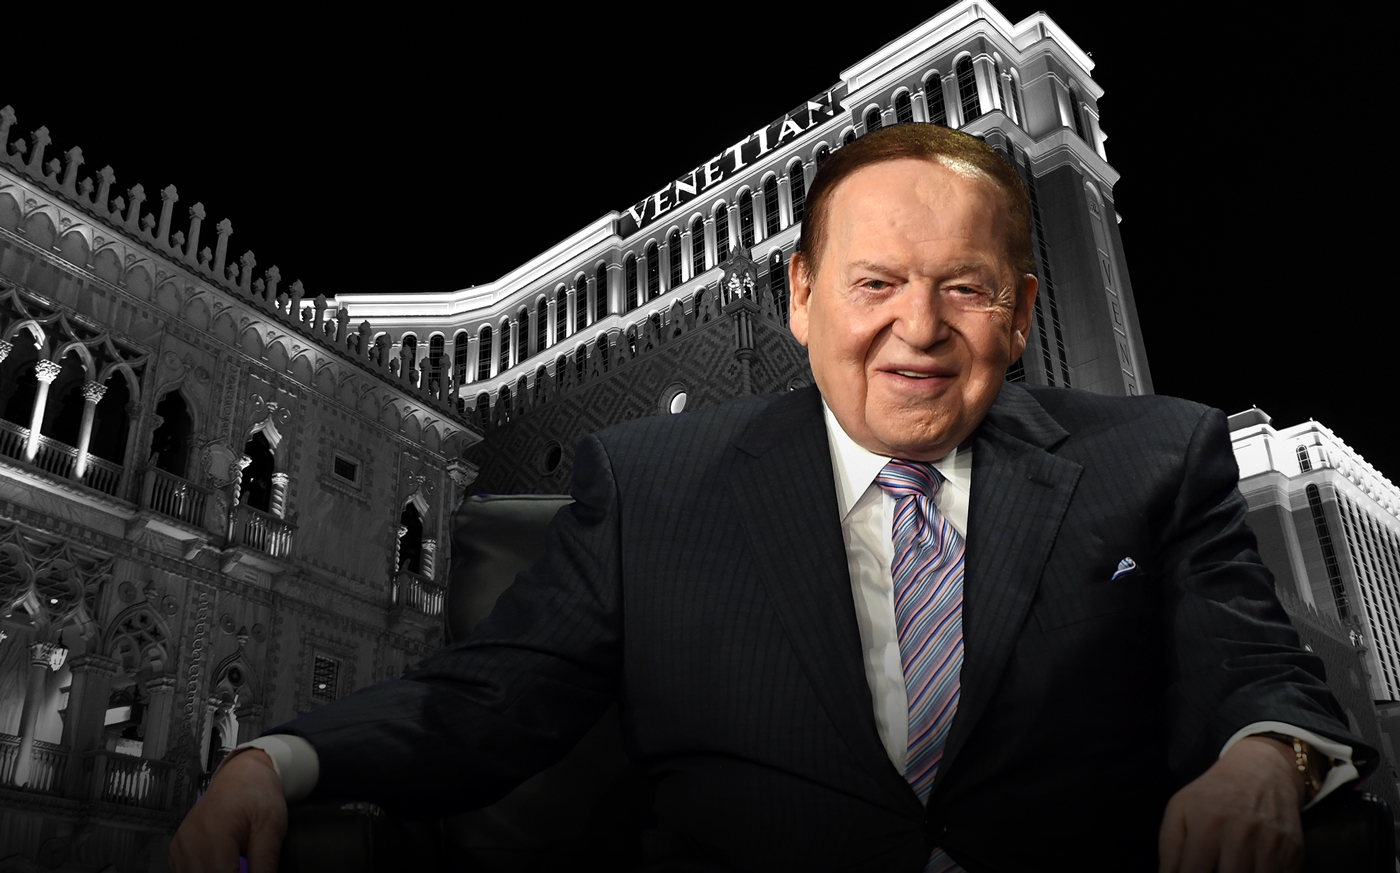 Sheldon Adelson and the Venetian in Las Vegas (Gettty)